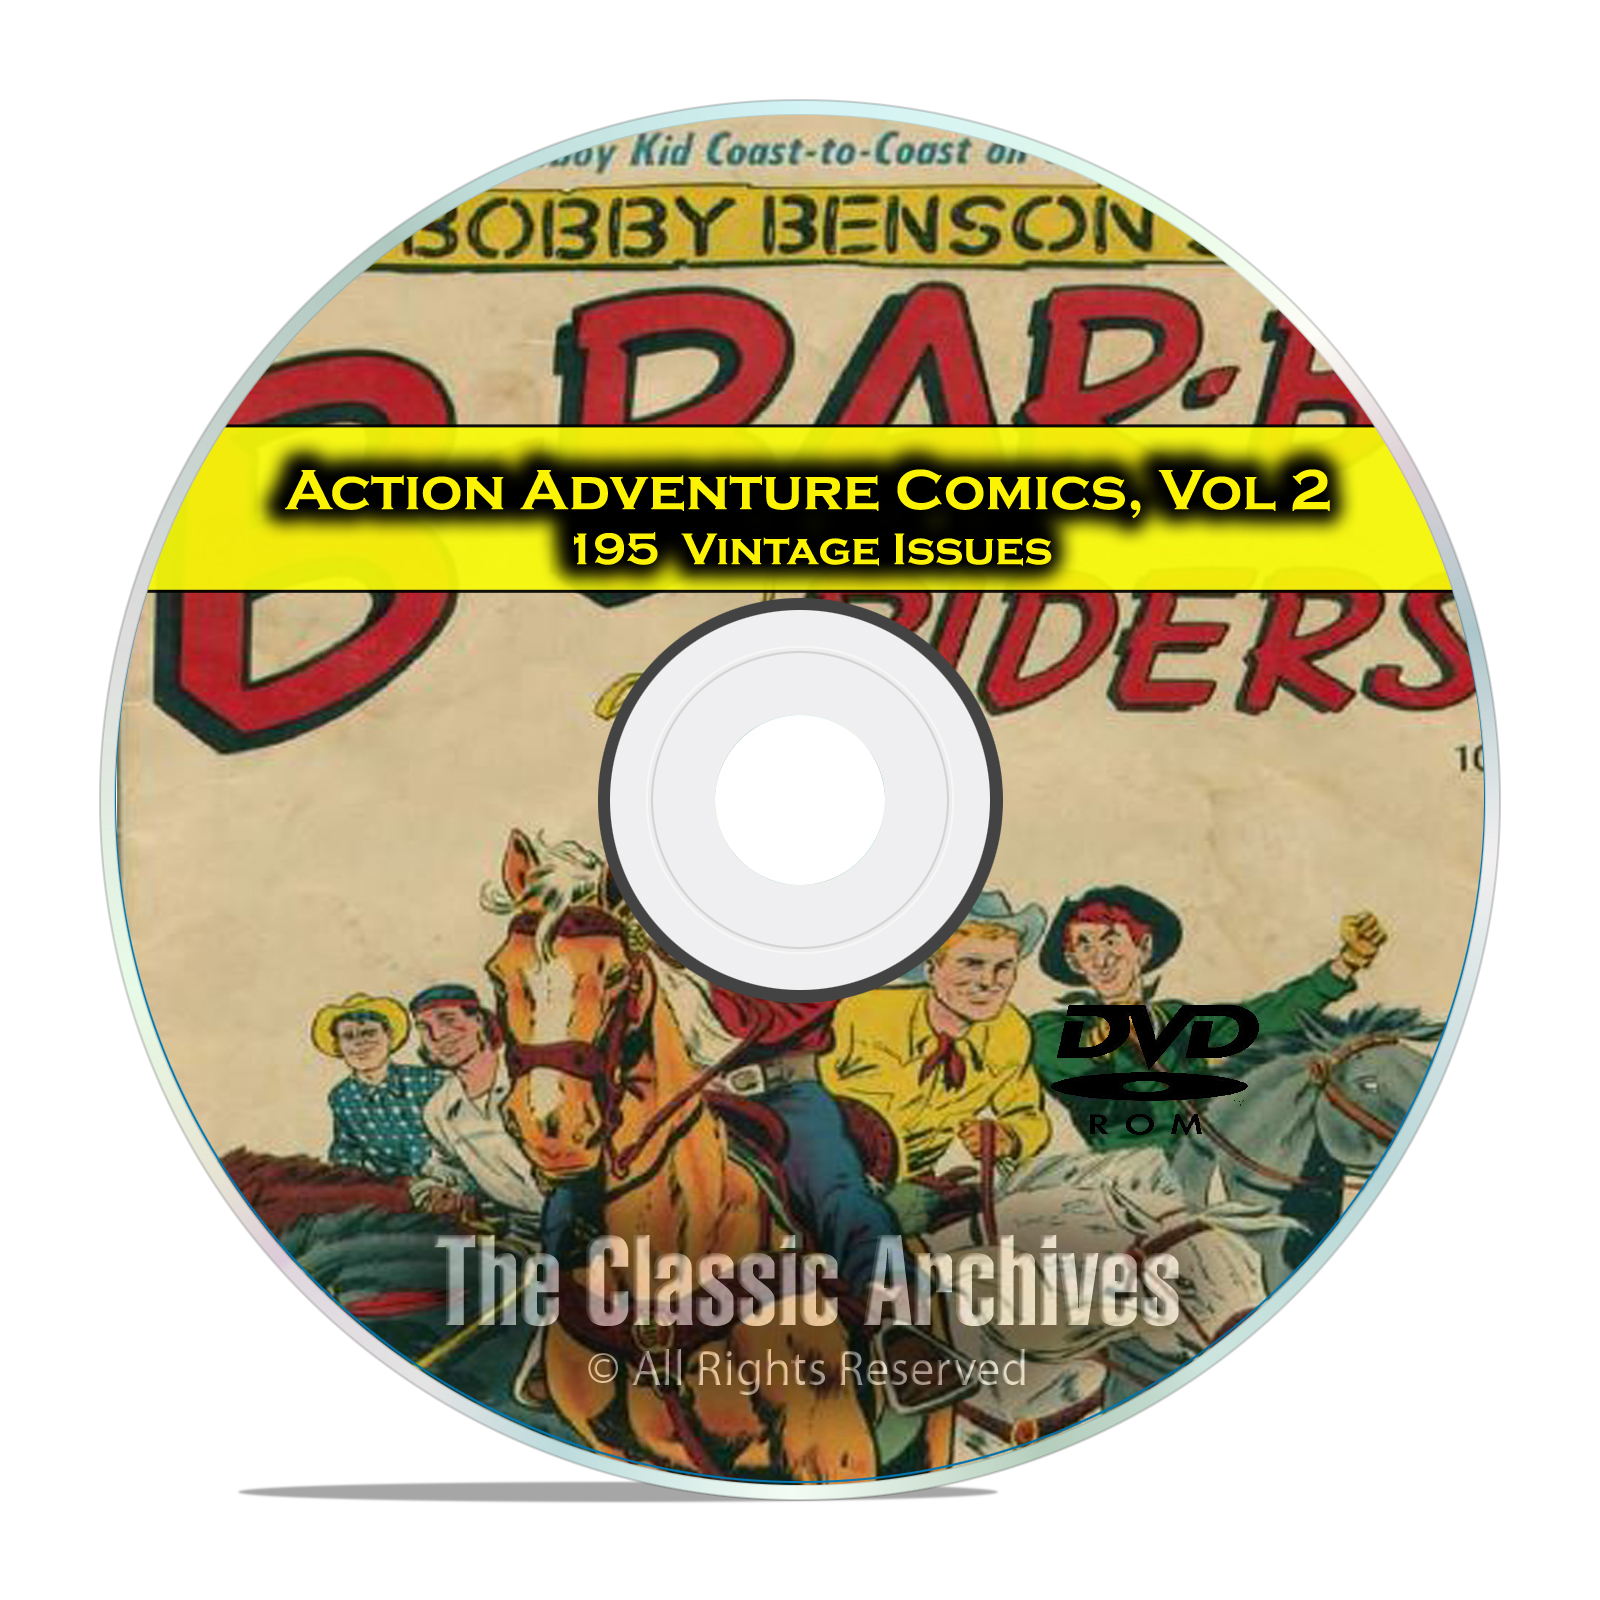 Action Adventure Comics, Vol 2, Champ Bobby Benson, Long Bow Golden Age DVD